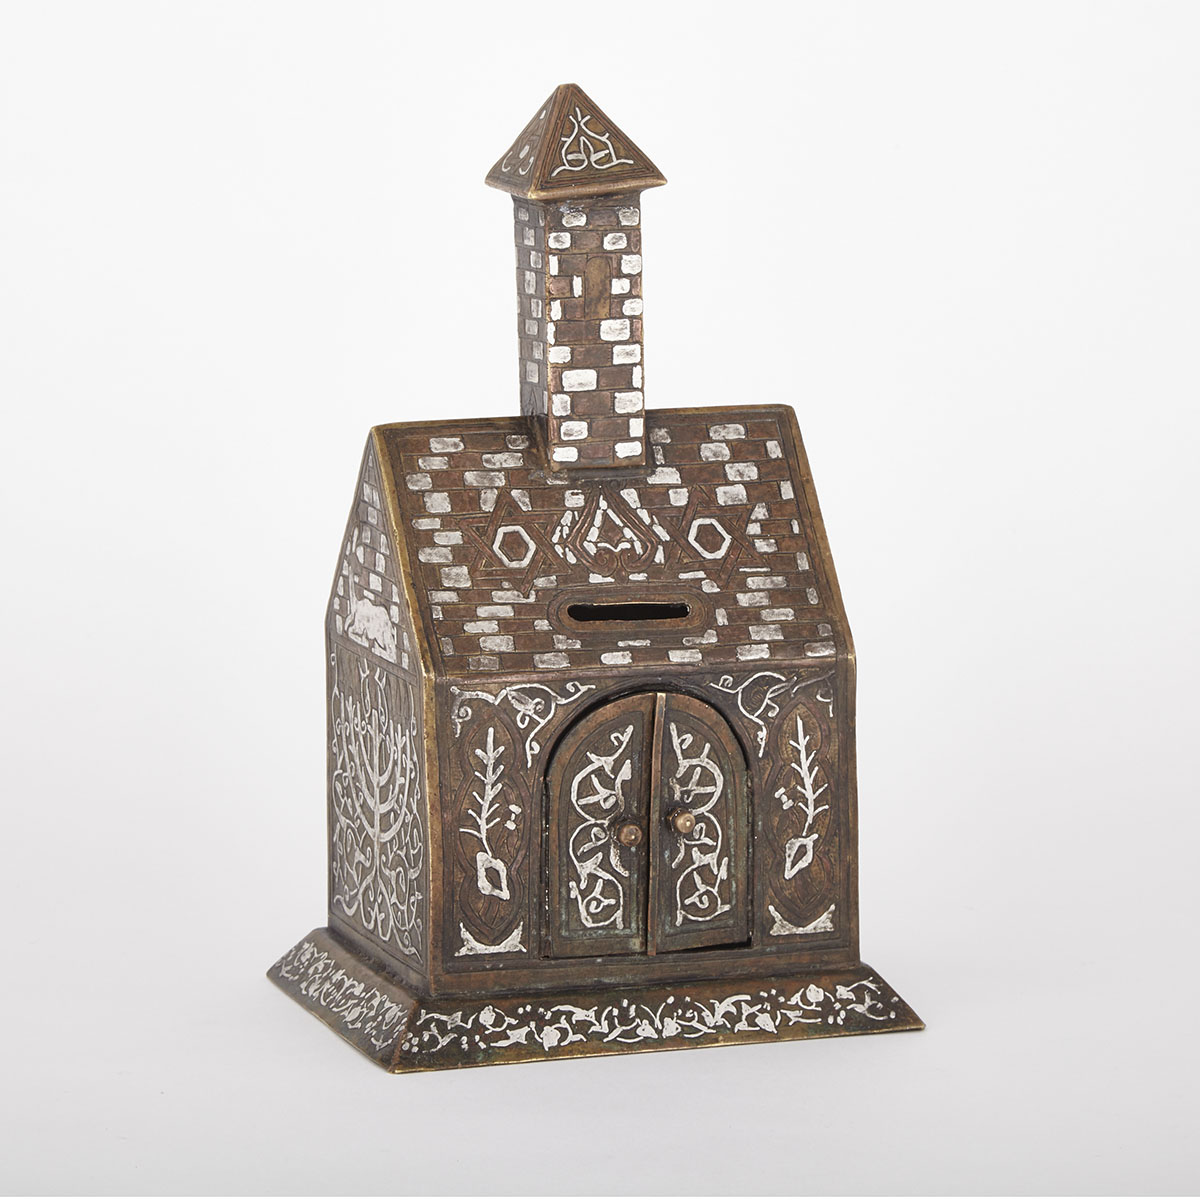 Syrian Silver and Copper Damascened Brass Tzedakah Charity Box, 19th century